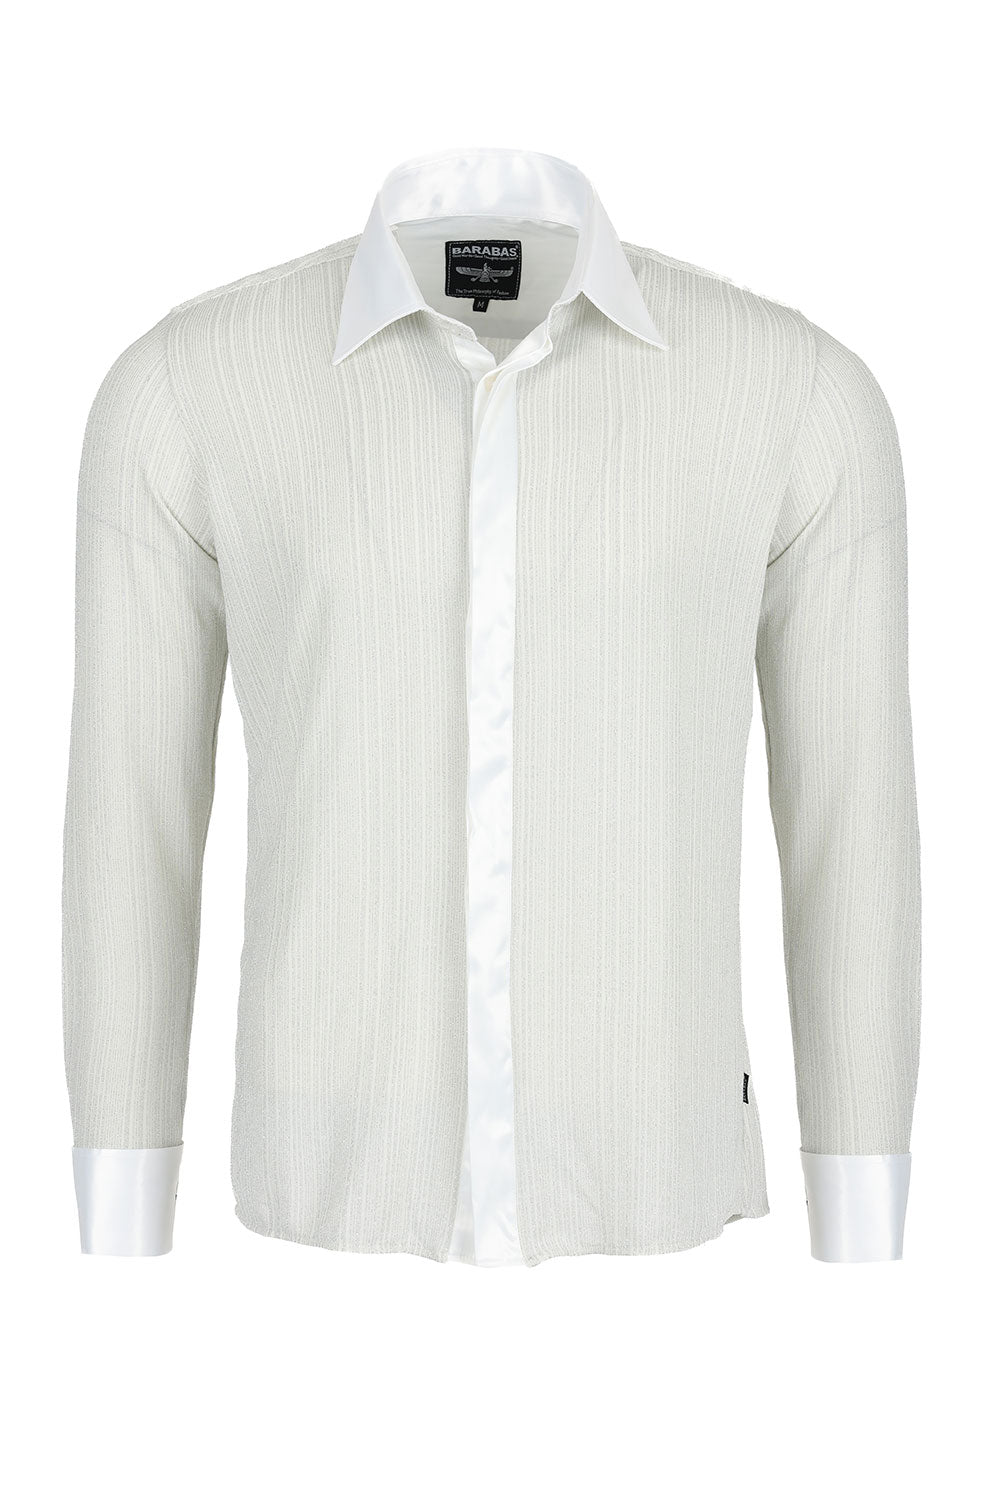 Barabas Men's French Cuff Long Sleeve Button Down Shirt 2FCS10002 White